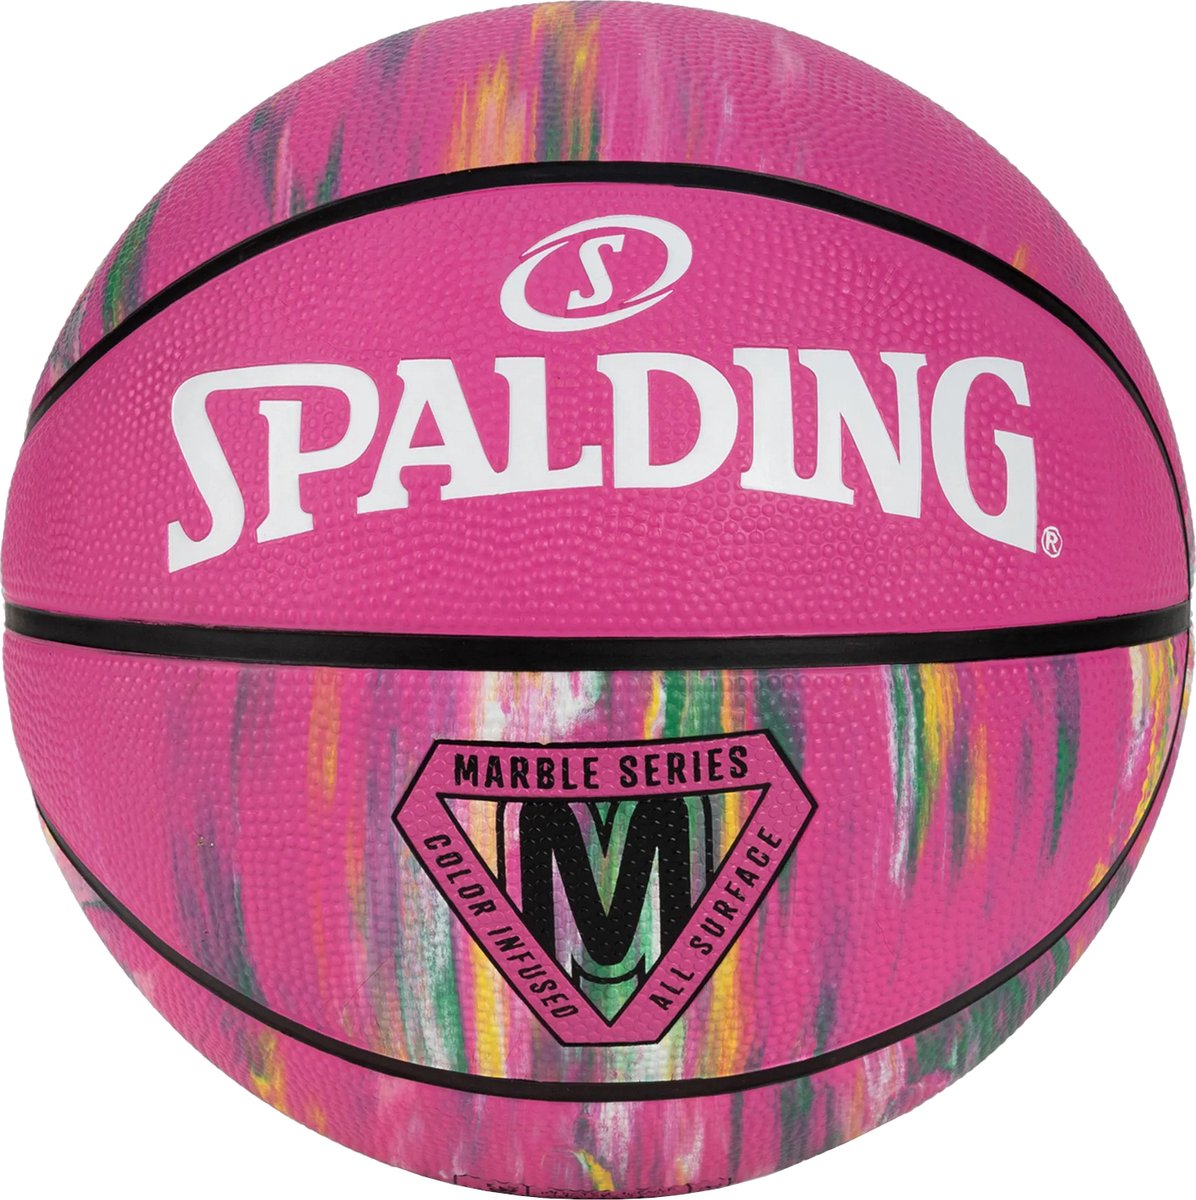 Spalding Marble Ball 84417Z, Unisex, Roze, basketbal, maat: 5